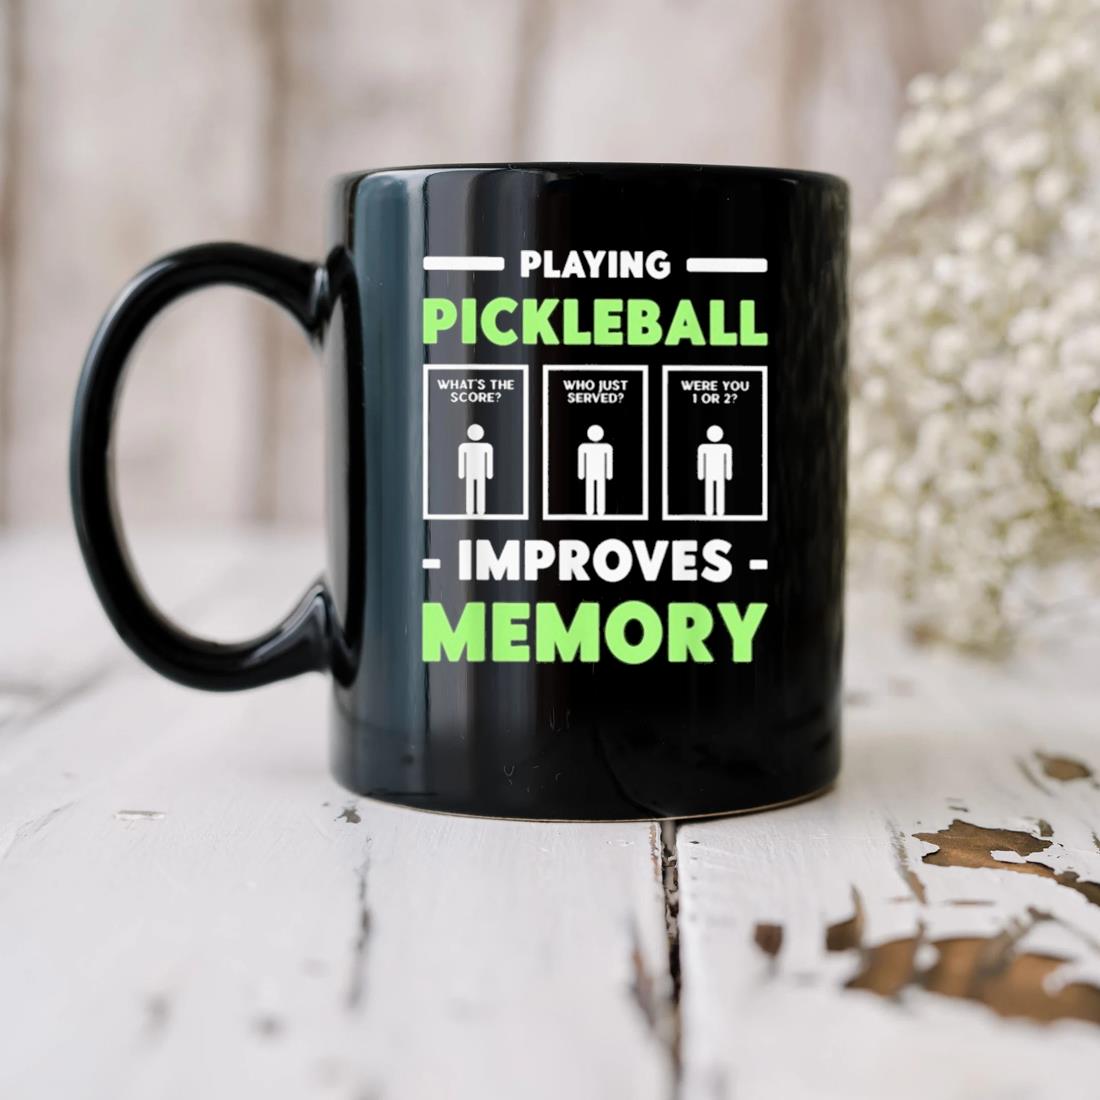 Playing Pickleball Improves Memory Mug